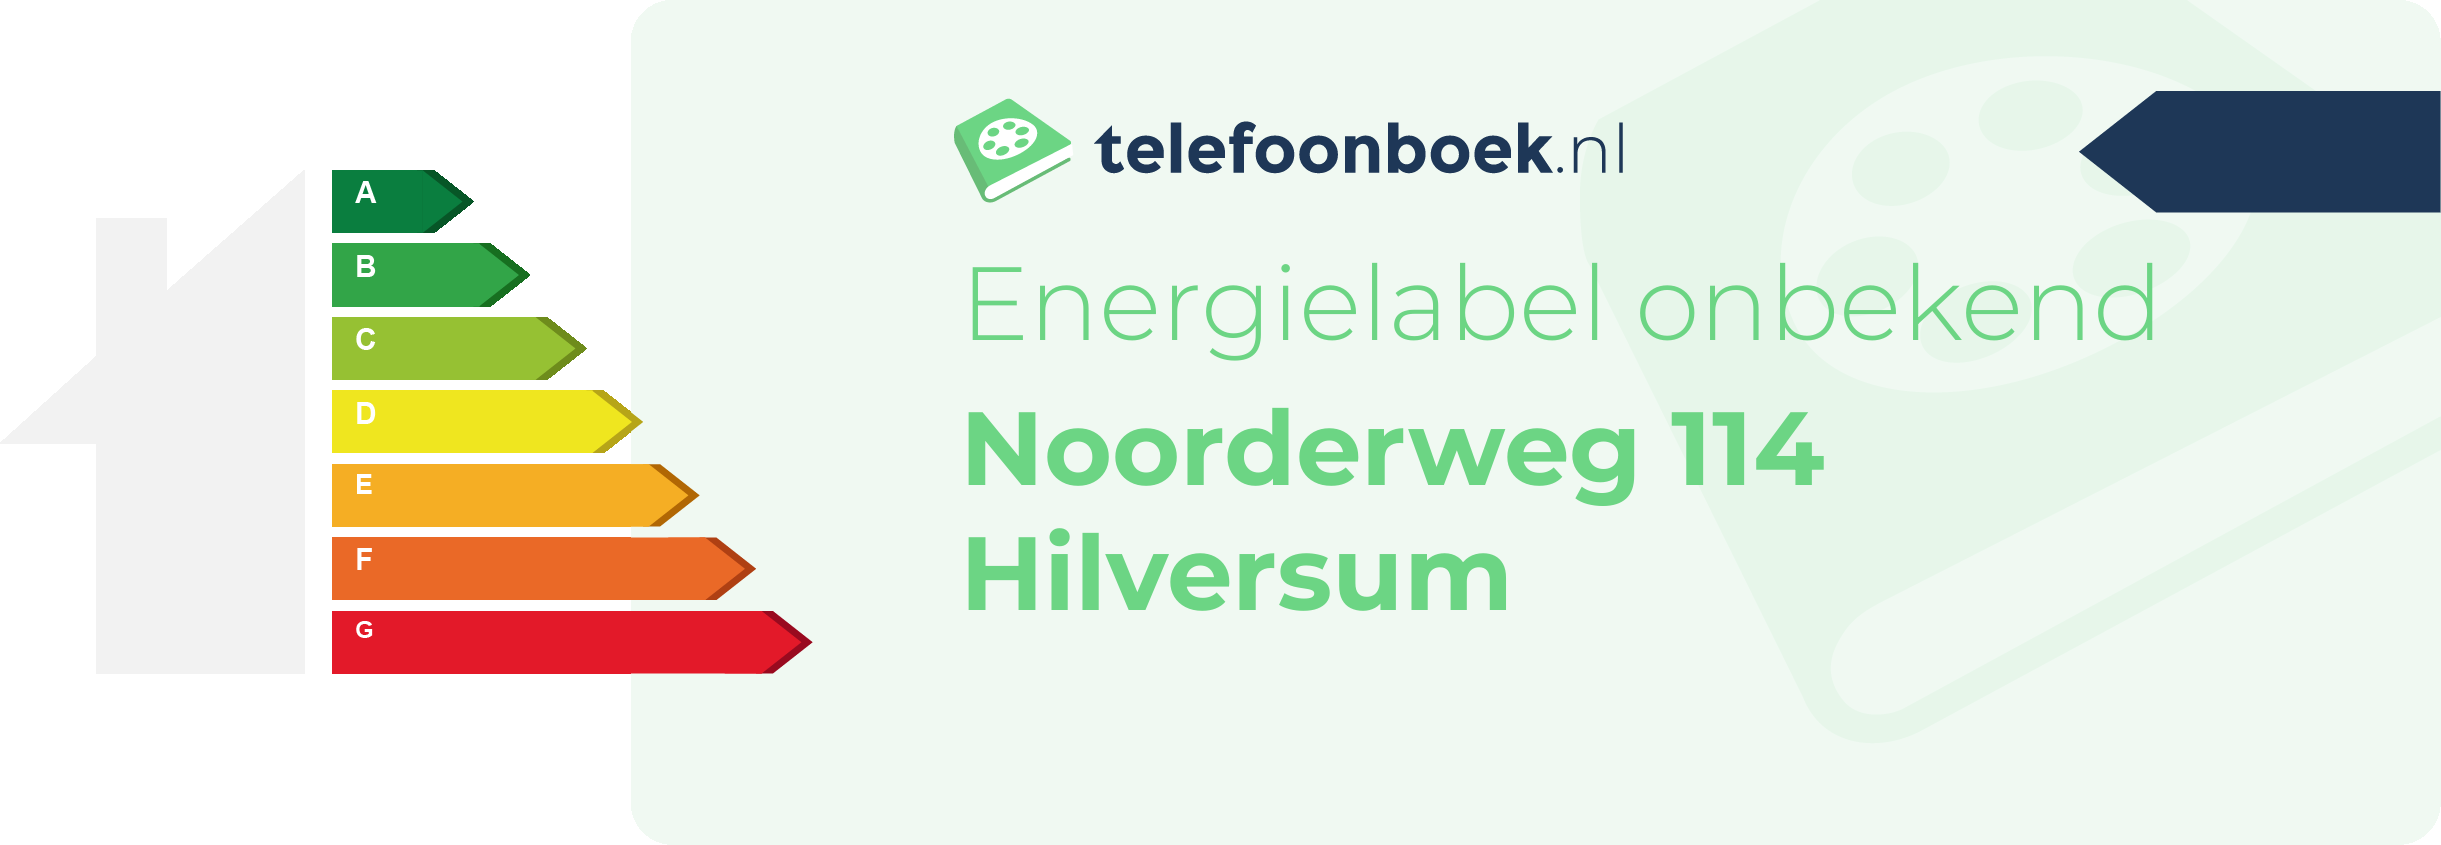 Energielabel Noorderweg 114 Hilversum